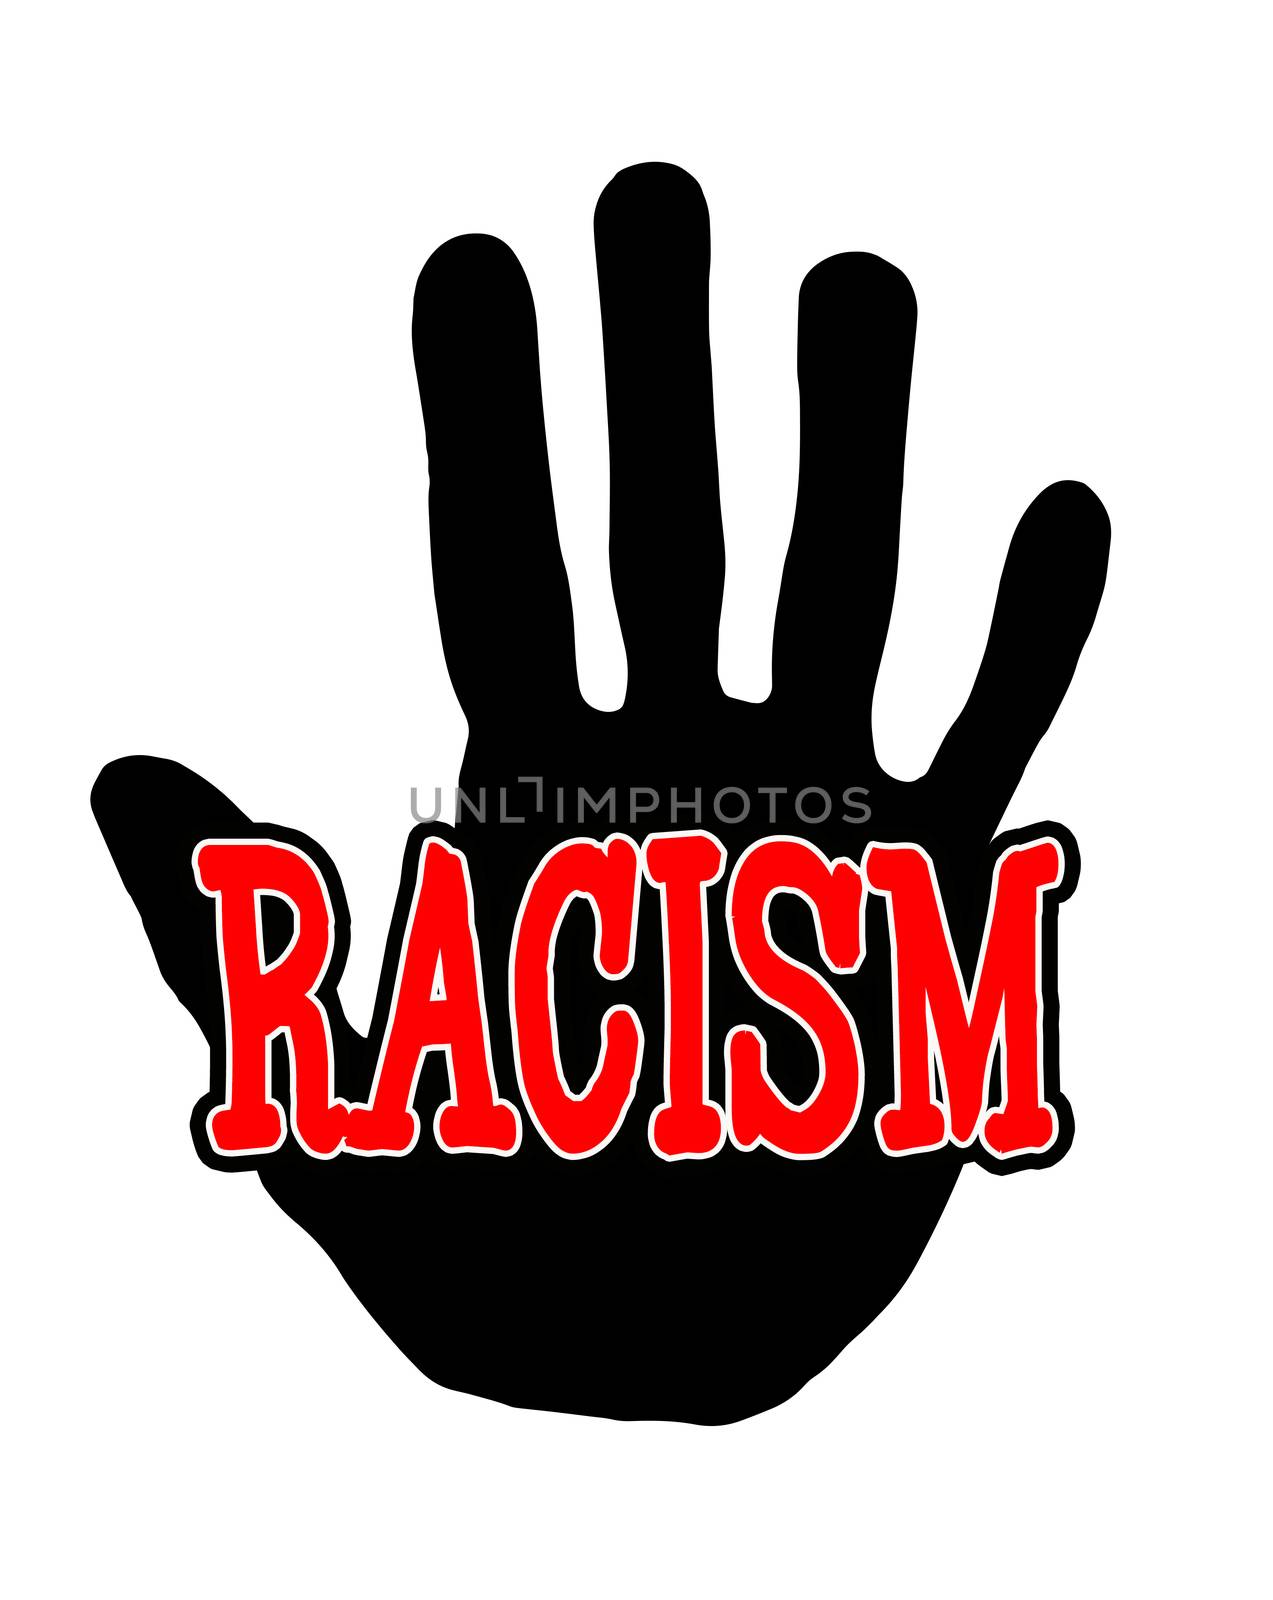 Handprint racism by Milovan